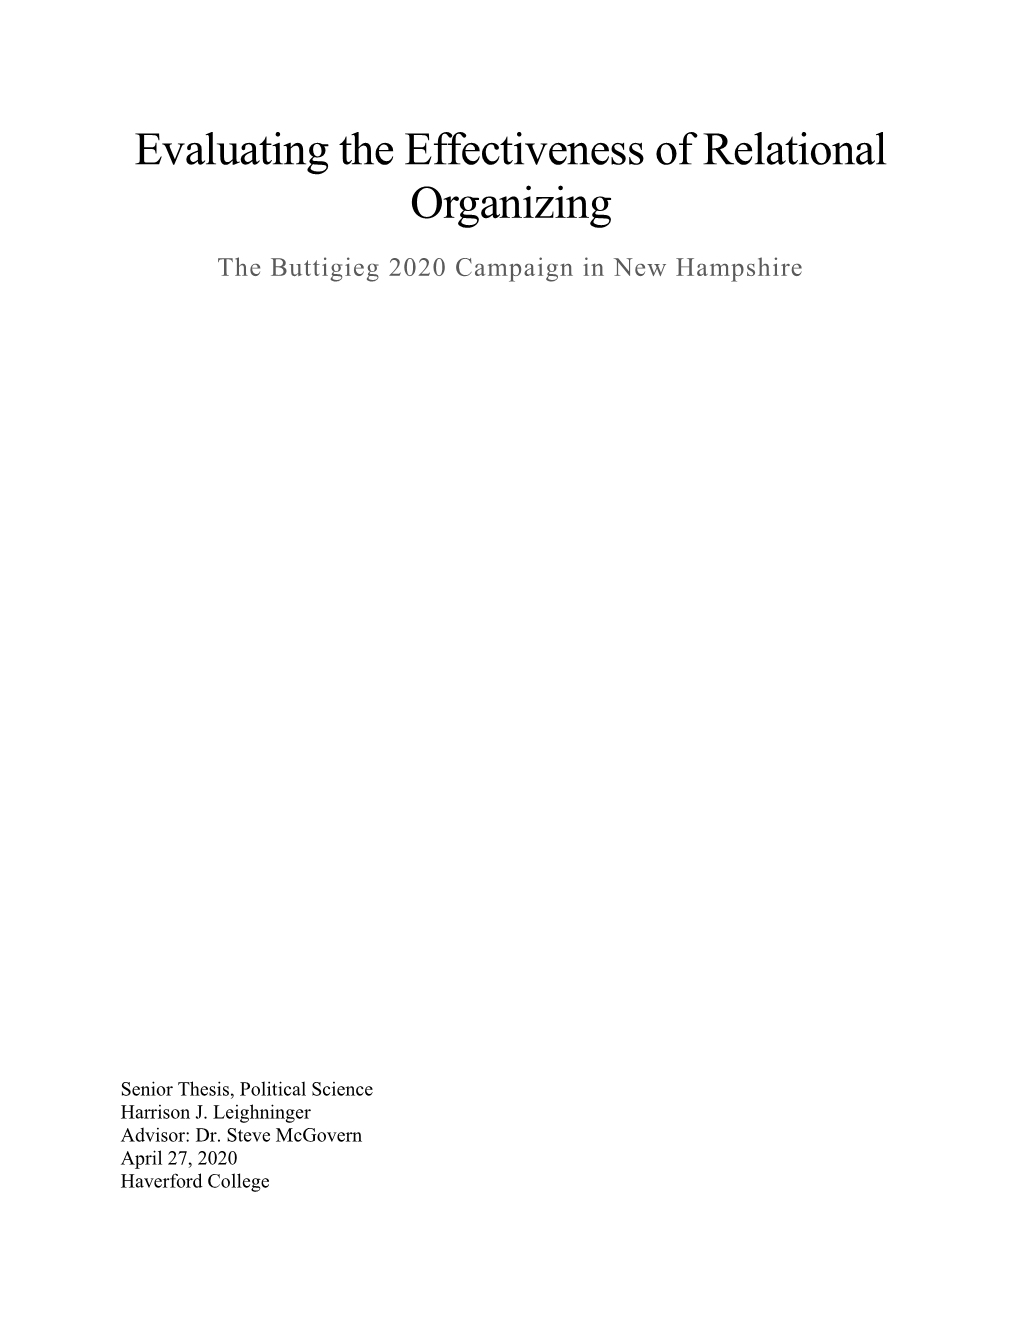 Evaluating the Effectiveness of Relational Organizing